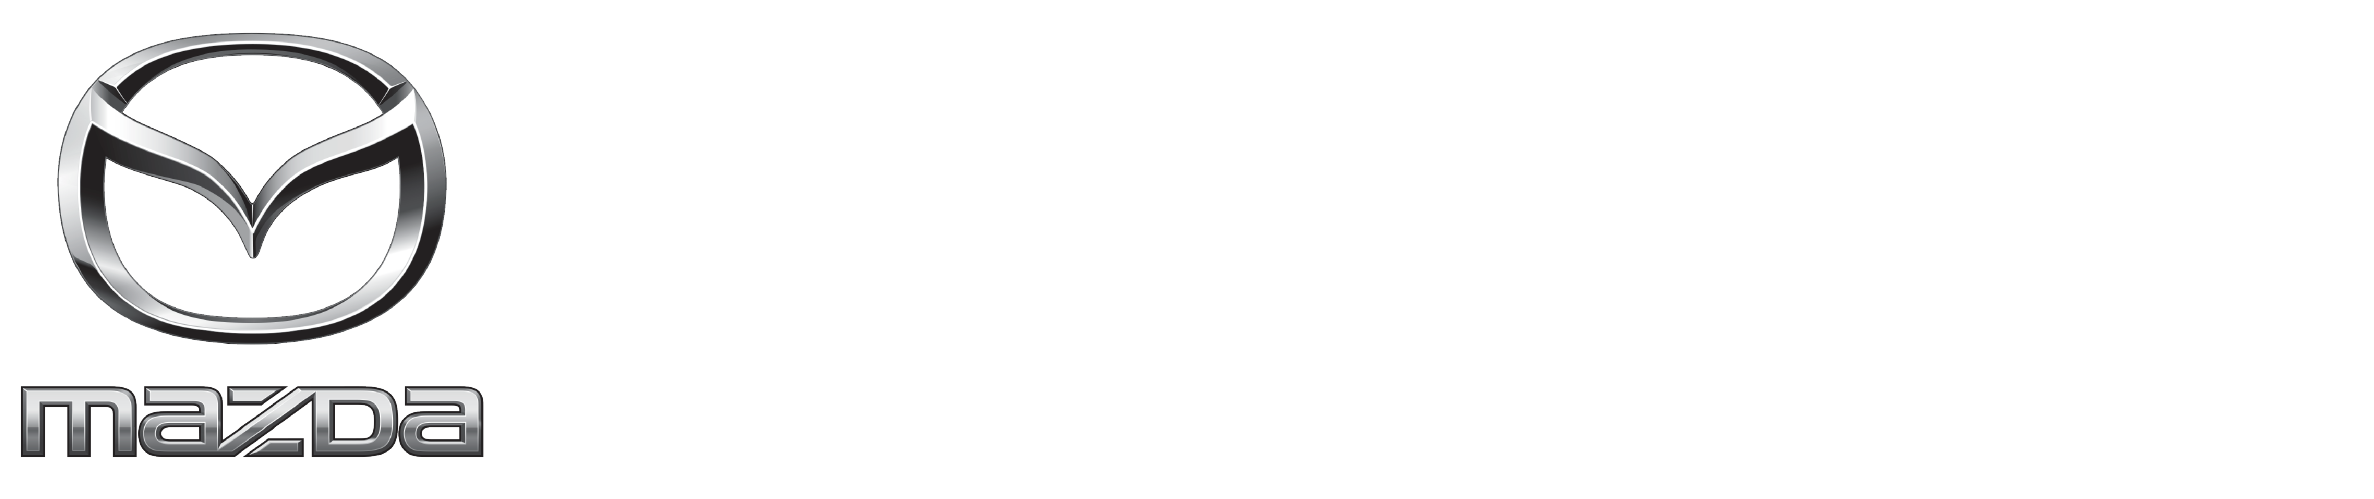 Parkway Family Mazda